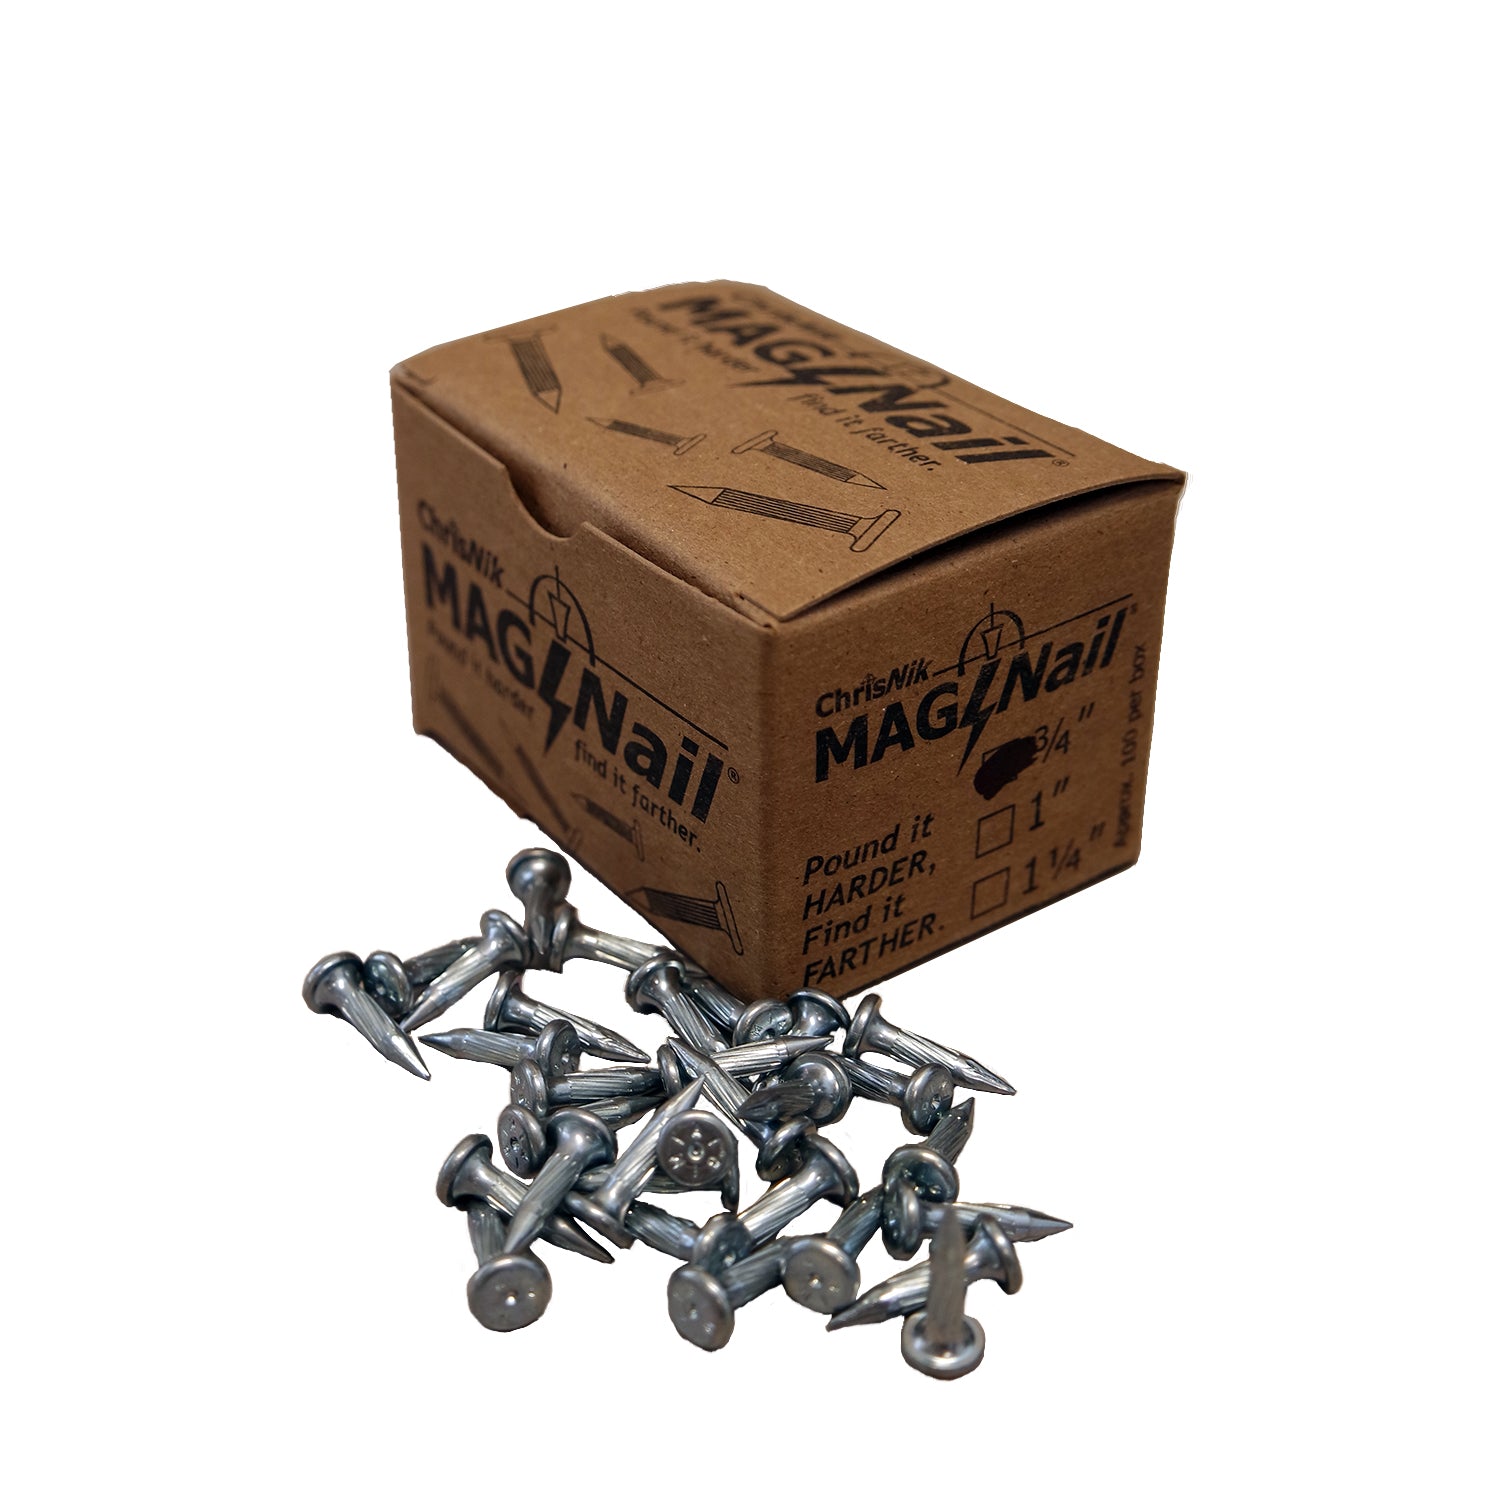 ChrisNik Mag Nails (100/Box) -Nails & Tacks- eGPS Solutions Inc.